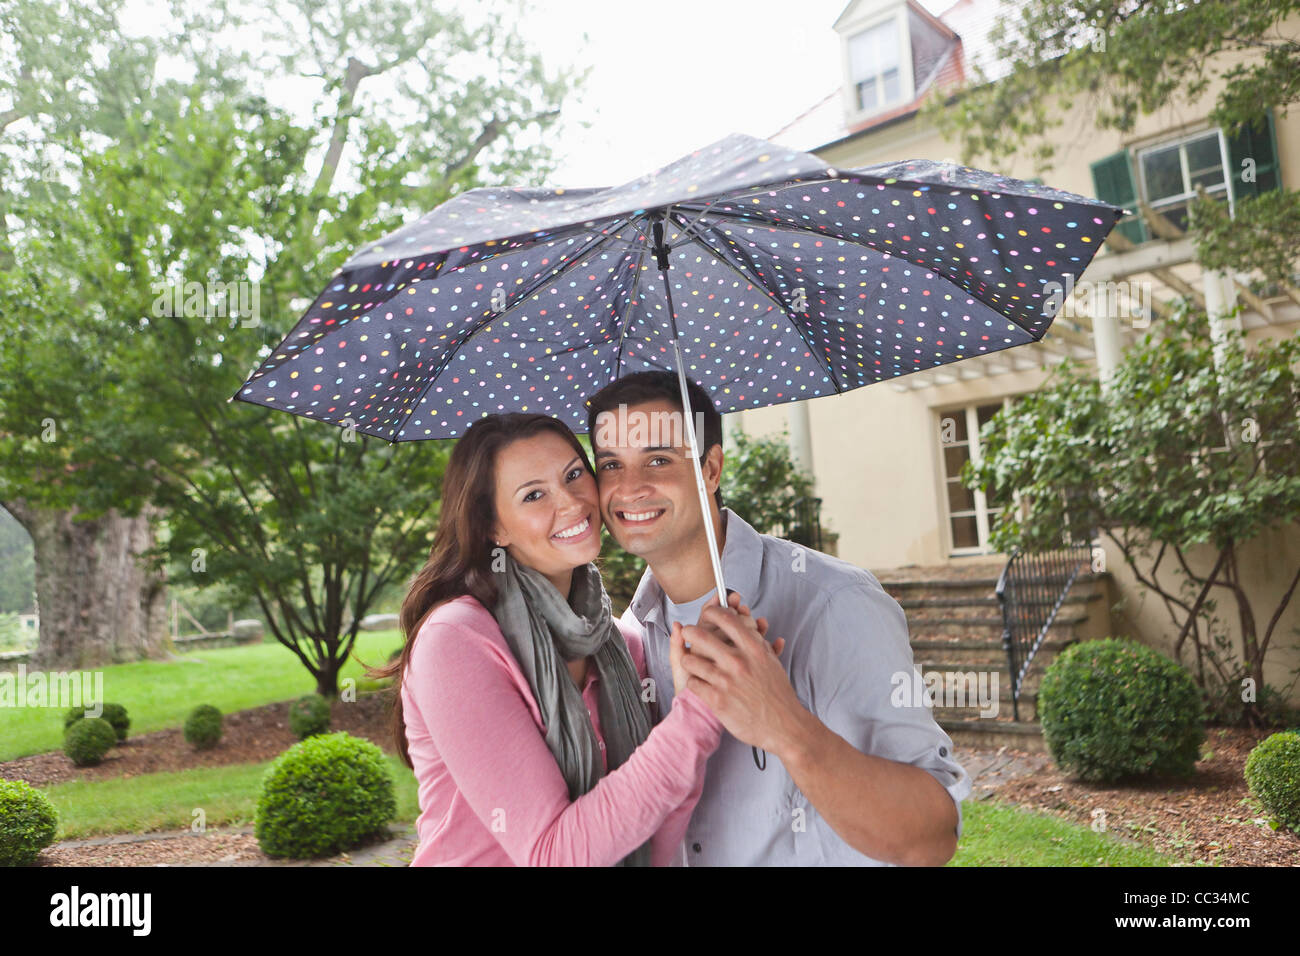 USA, New Jersey, Portrait of couple holding umbrella Stock Photo